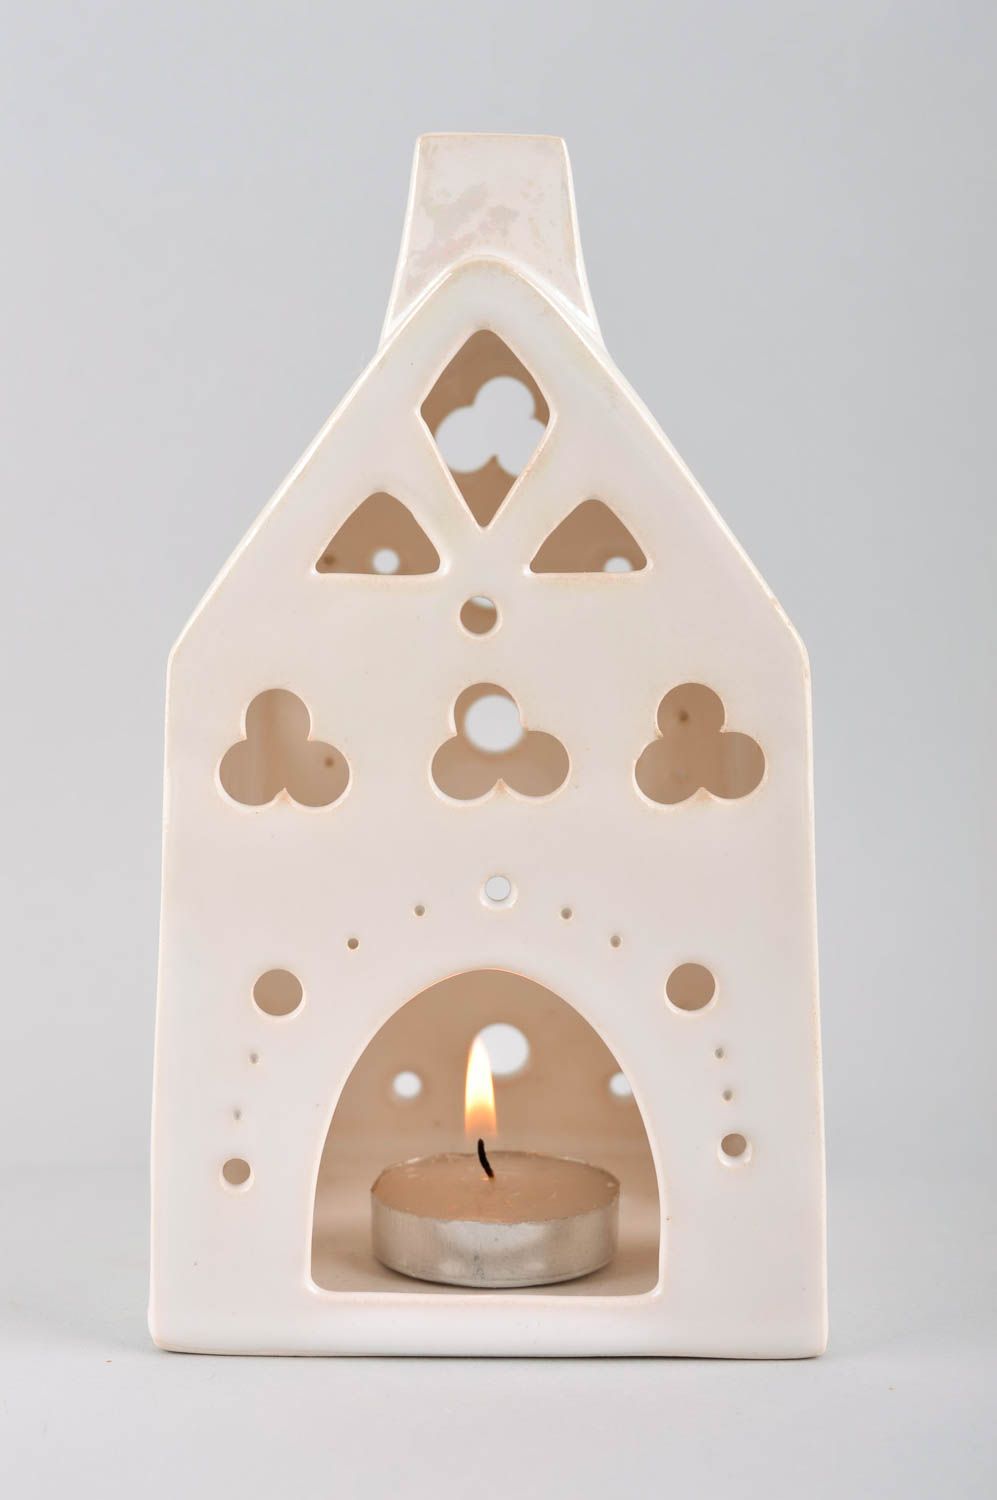 Handmade unusual candlestick designer home decor unusual stylish accessory photo 2